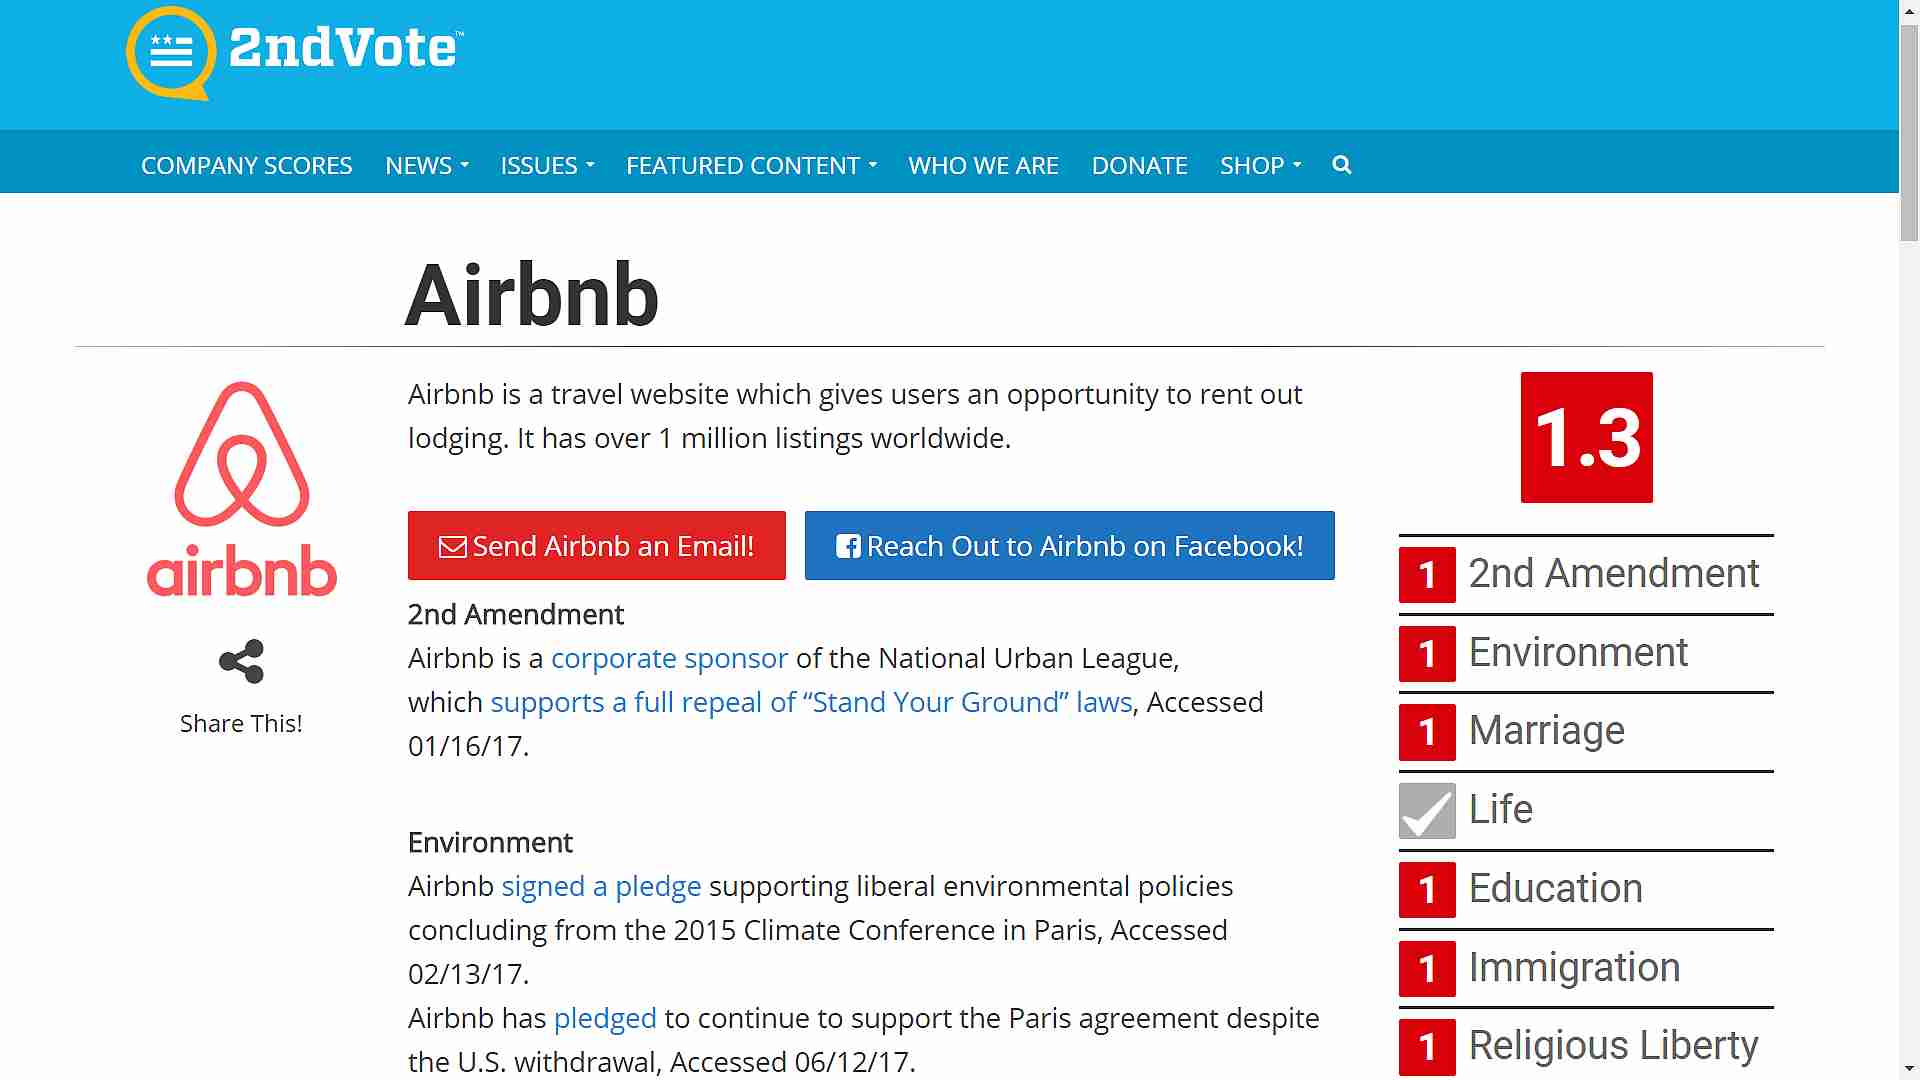 Airbnb's score